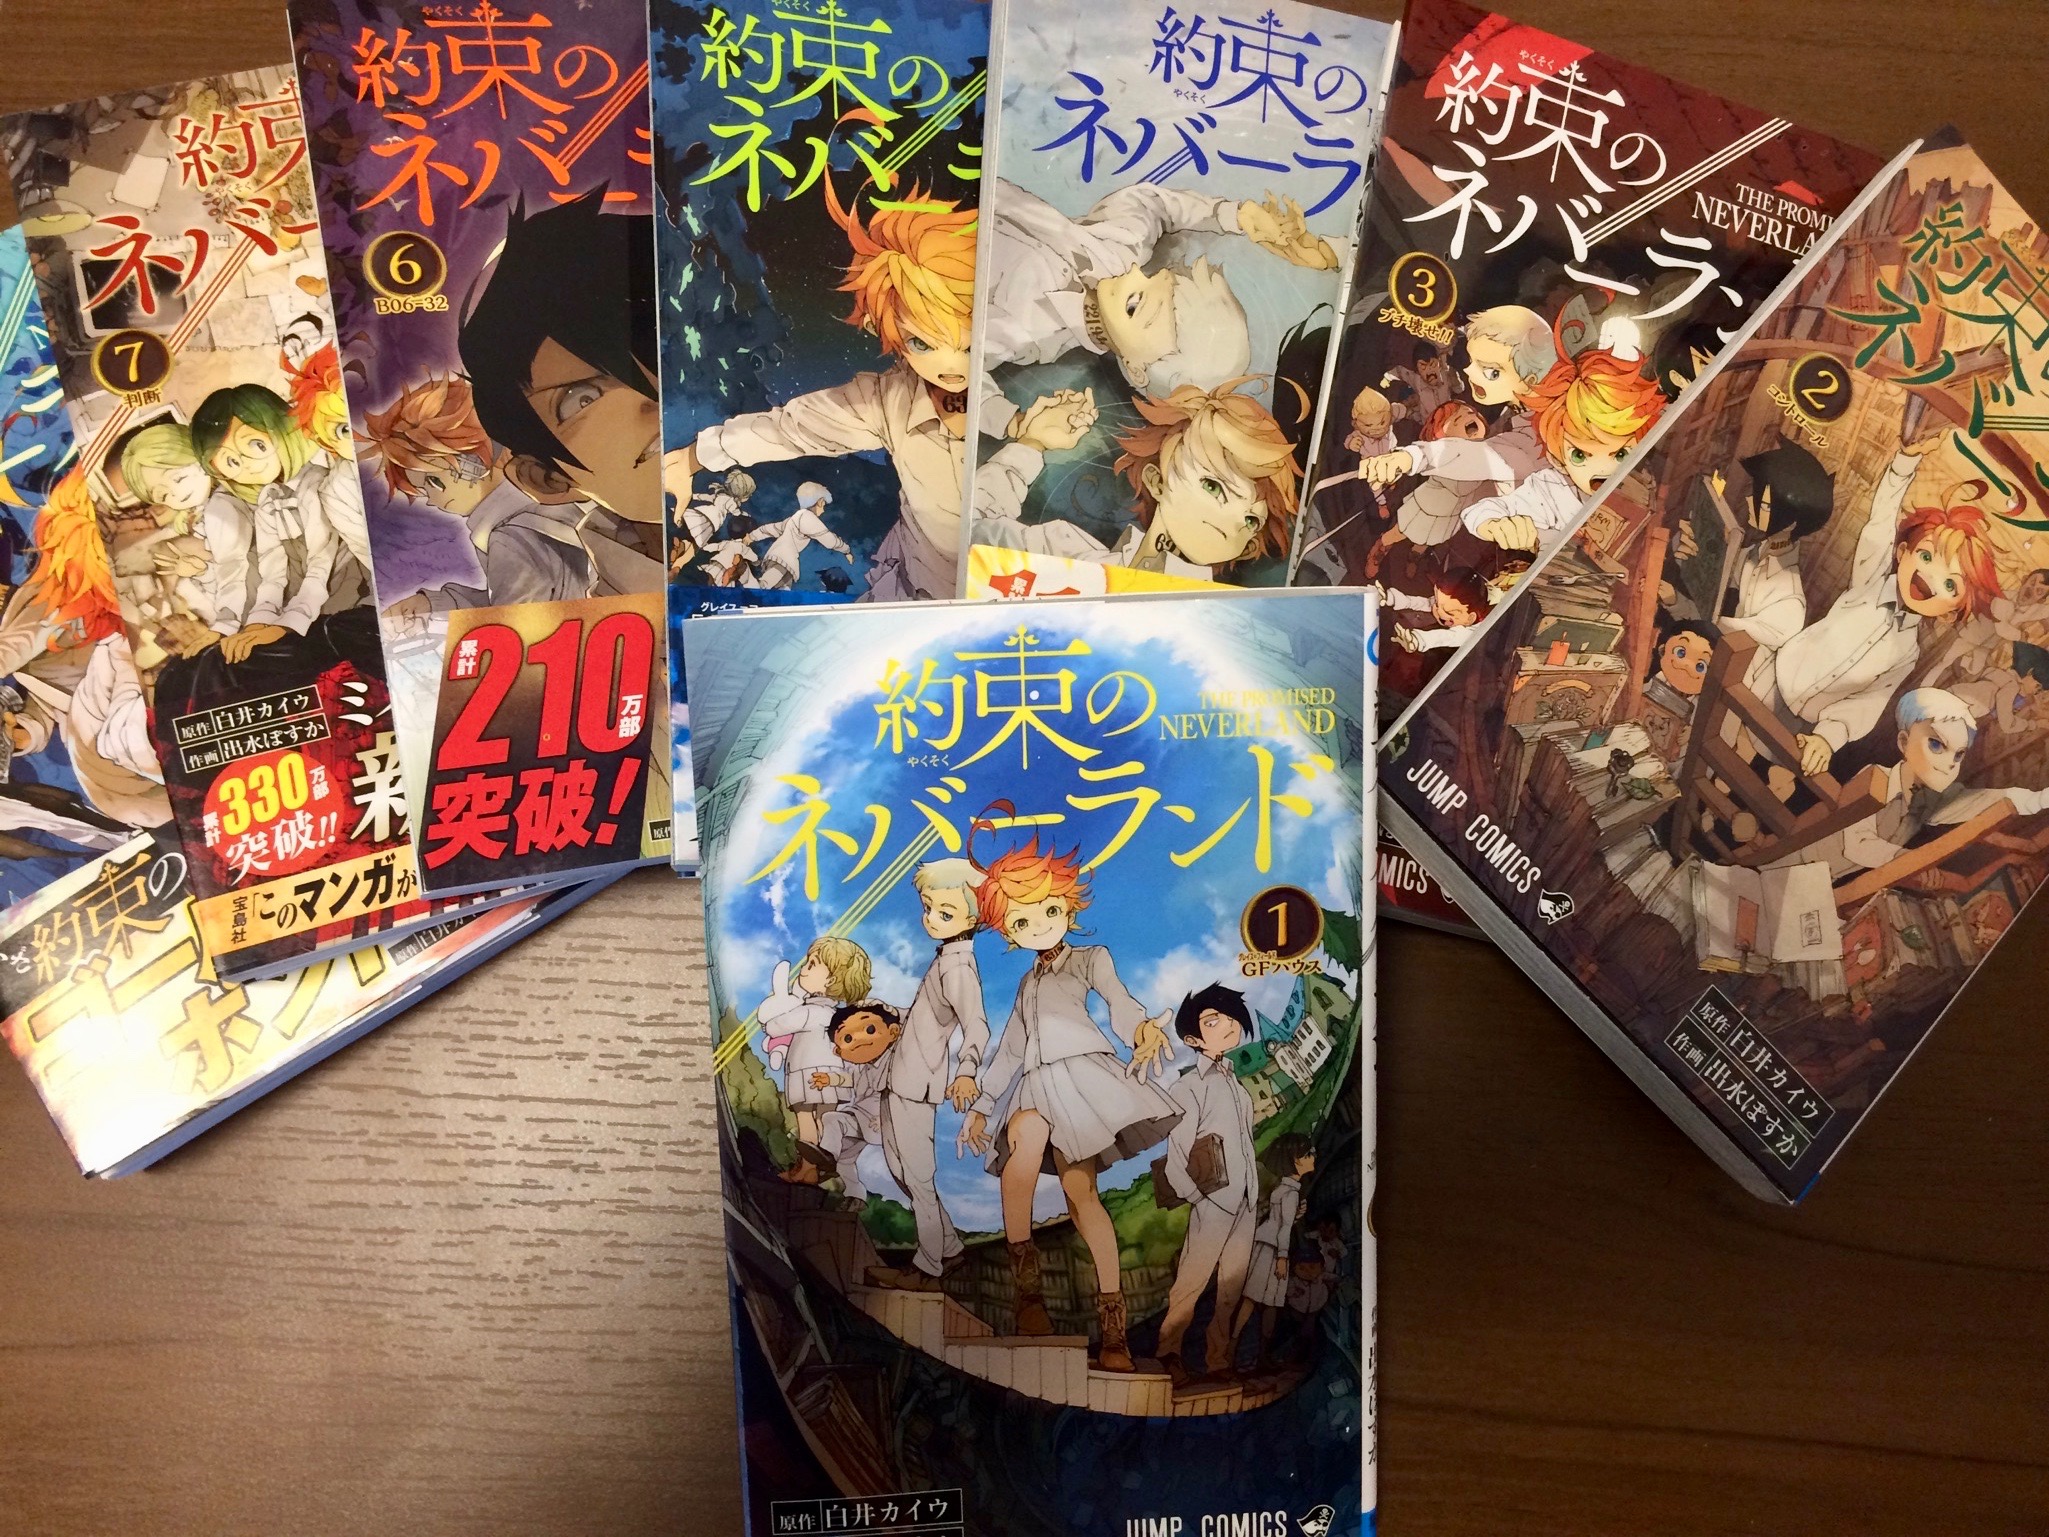 How To Start Reading Manga (The Beginner's Guide To Japanese Comics)